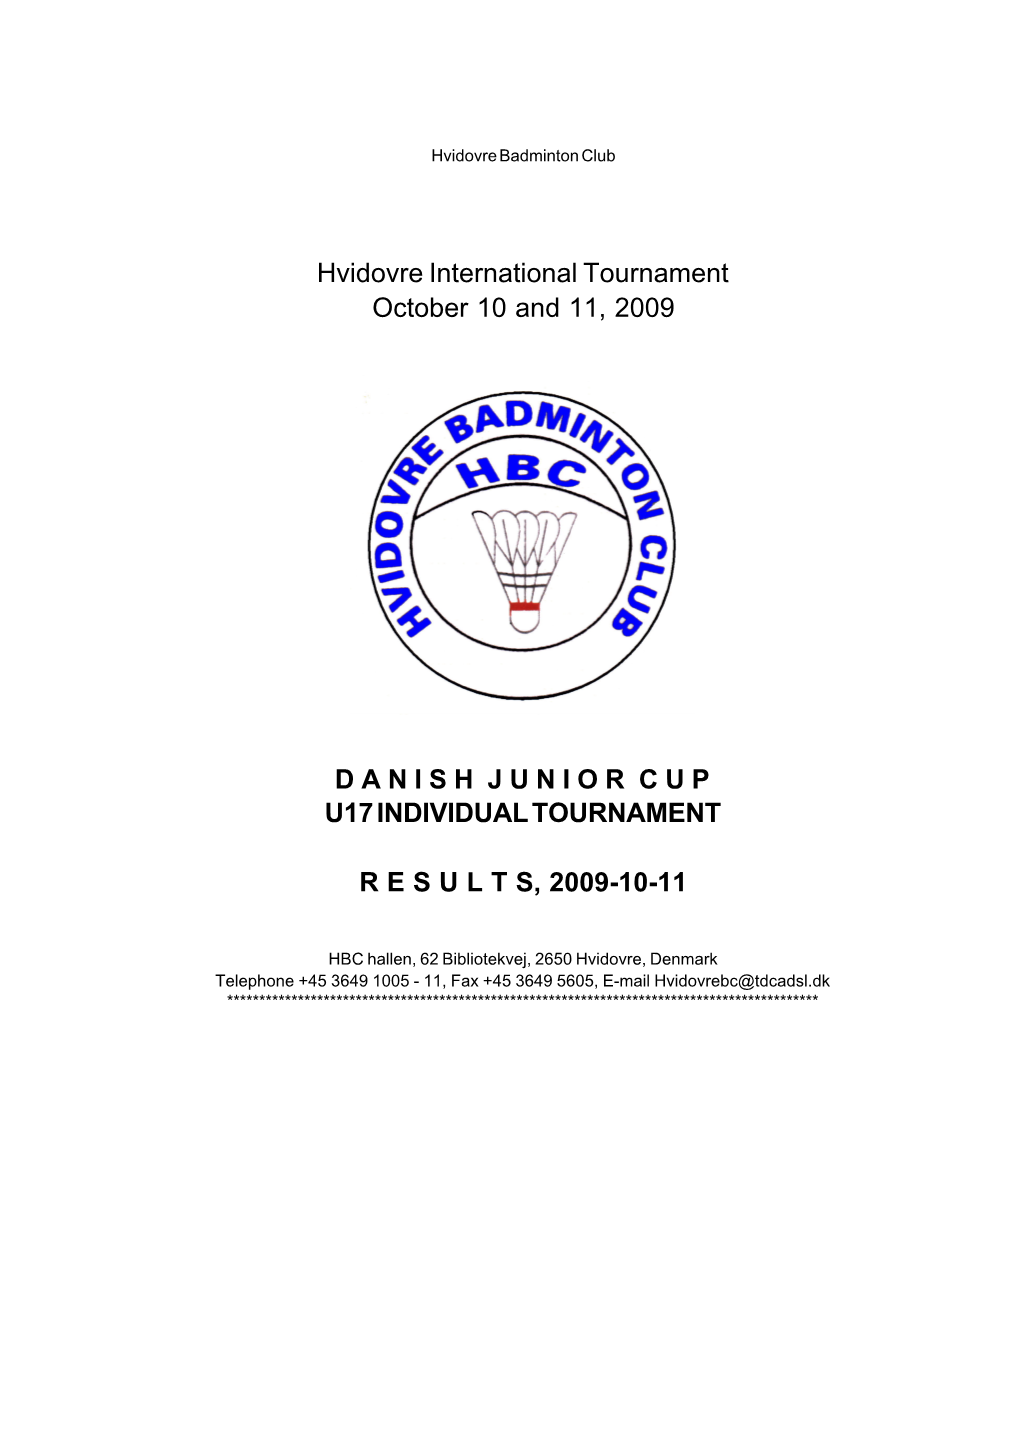 Hvidovre International Tournament October 10 and 11, 2009